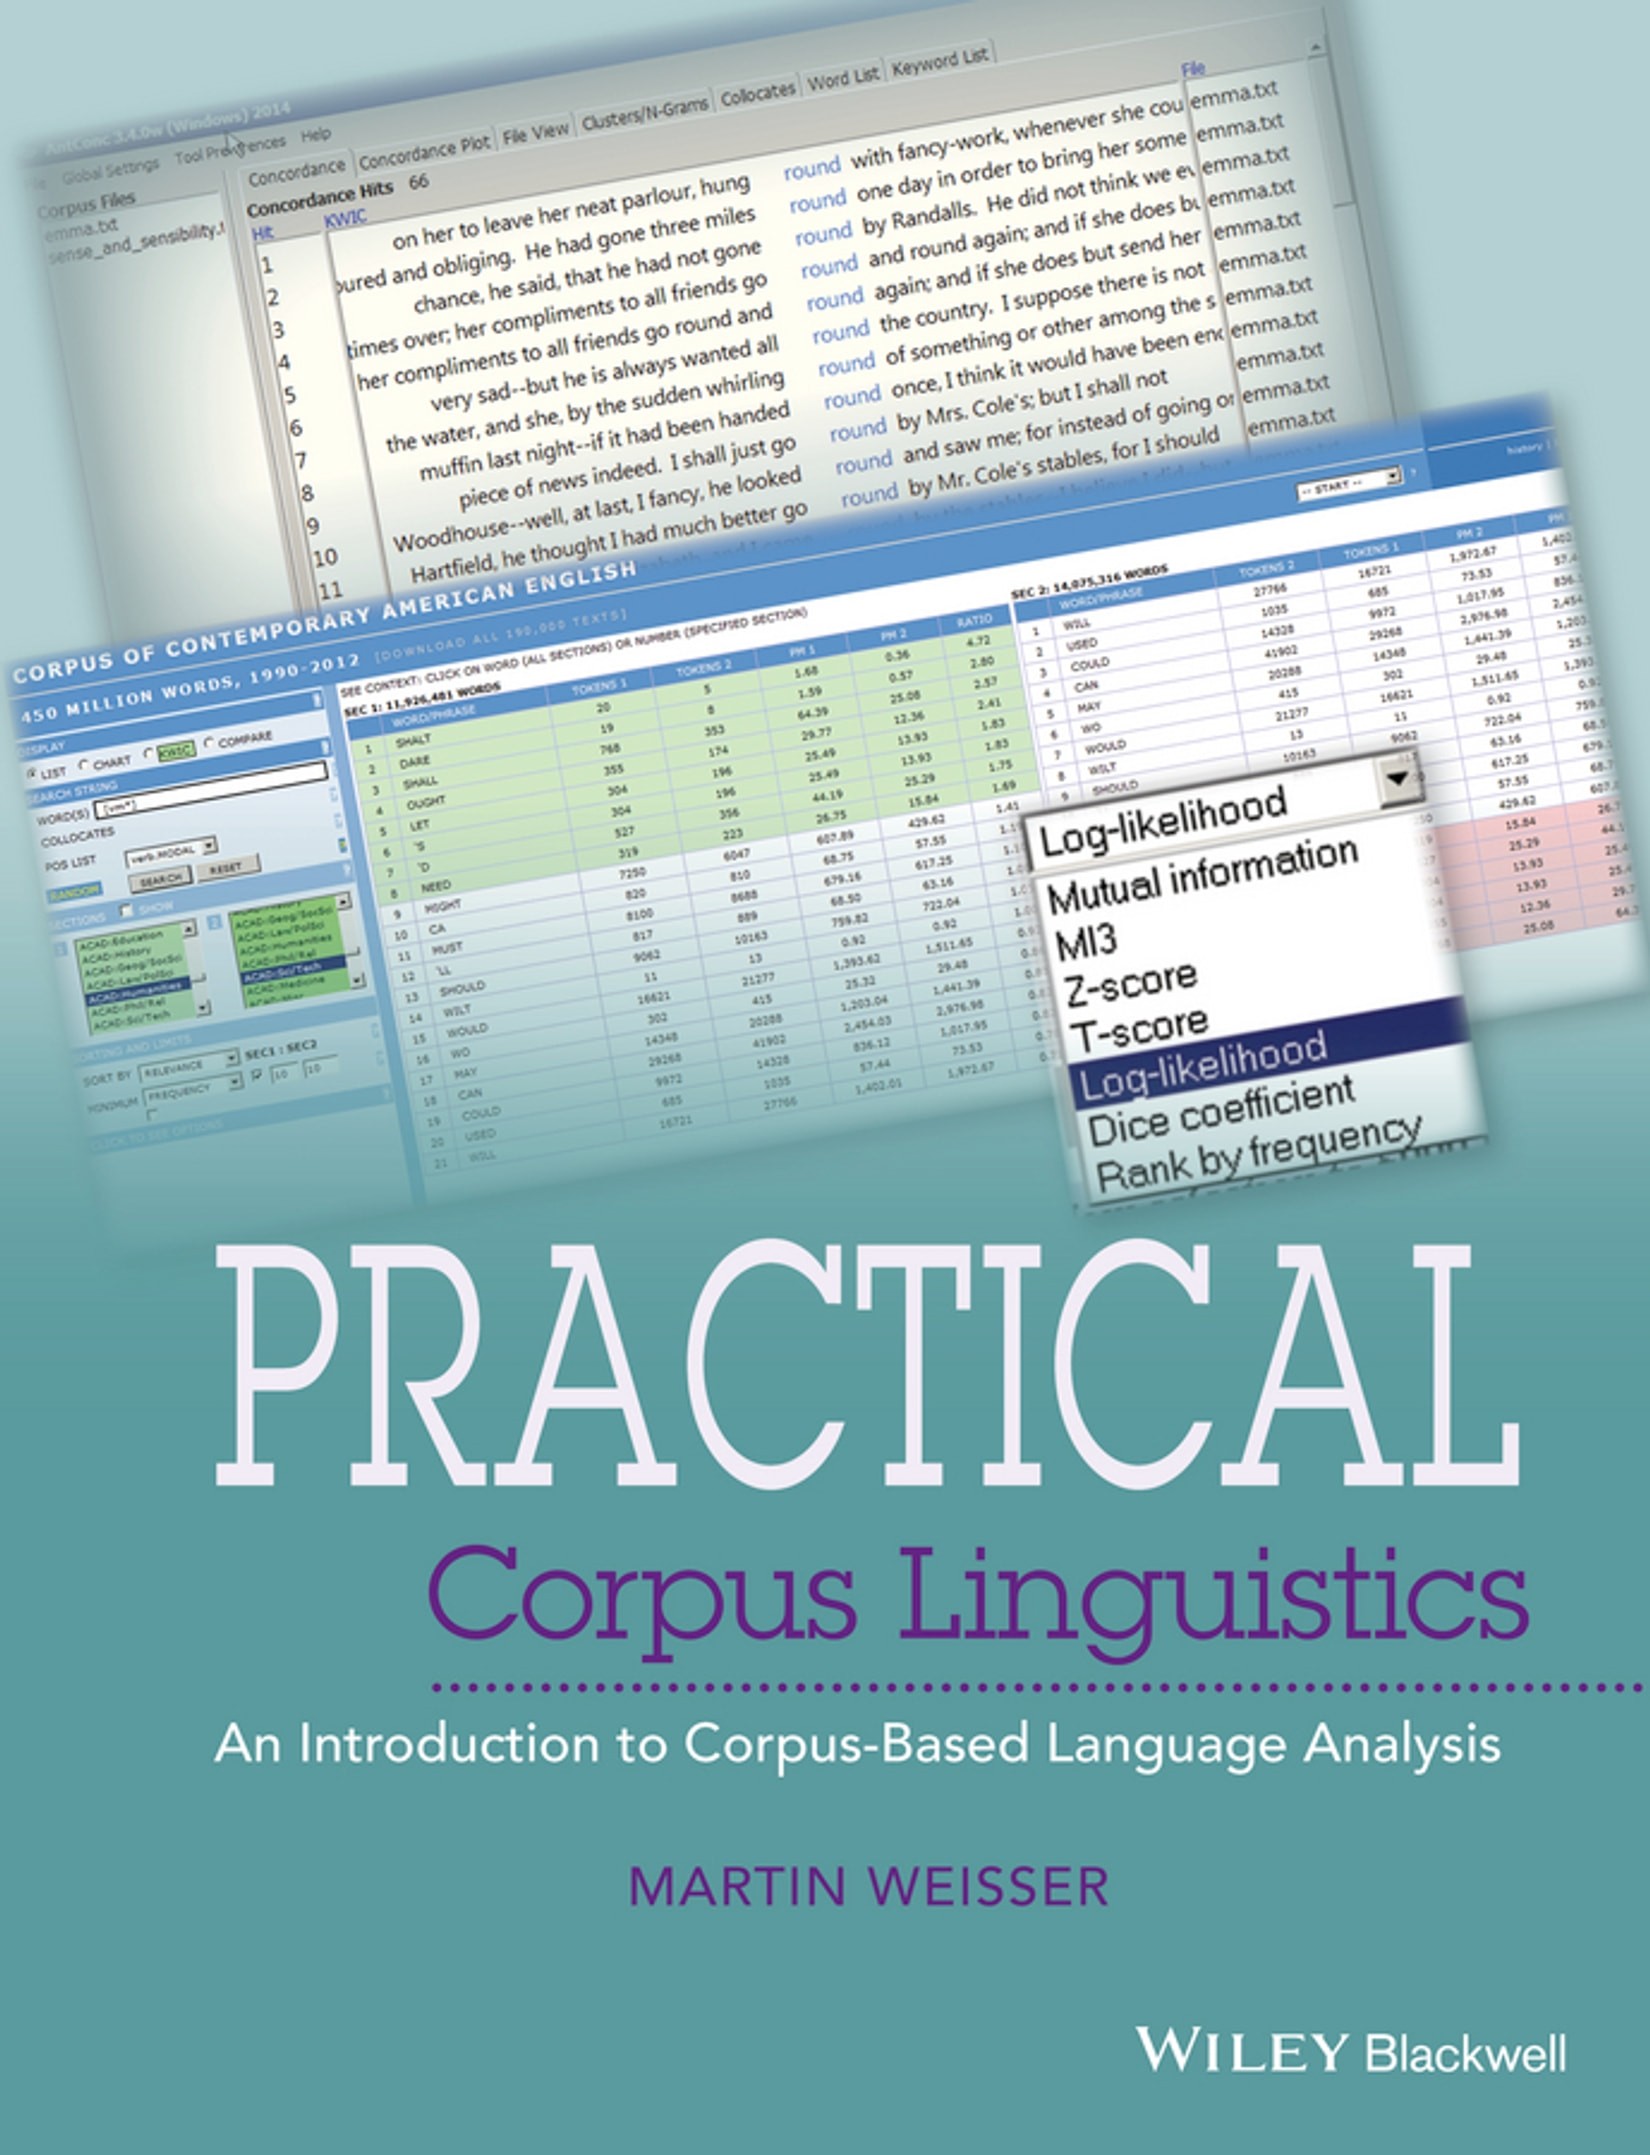 Practical Corpus Linguistics: An Introduction to Corpus-Based Language Analysis